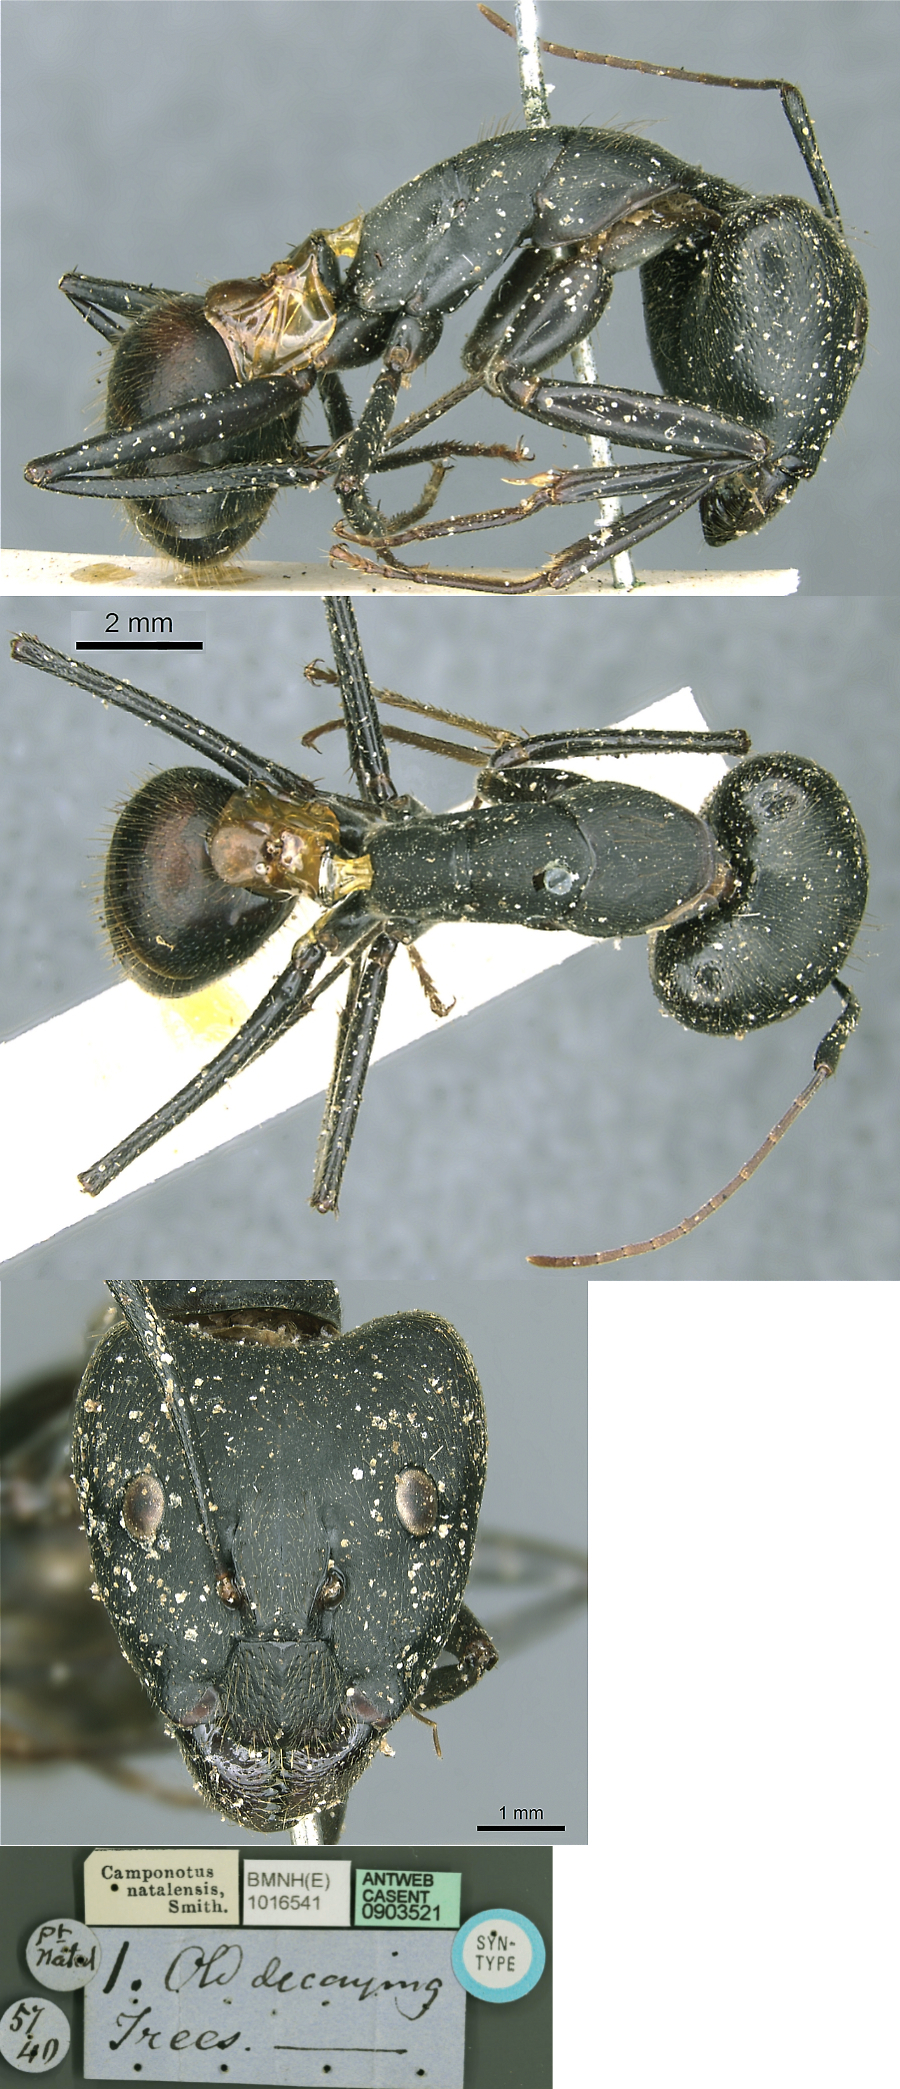 Camponotus natalensis major